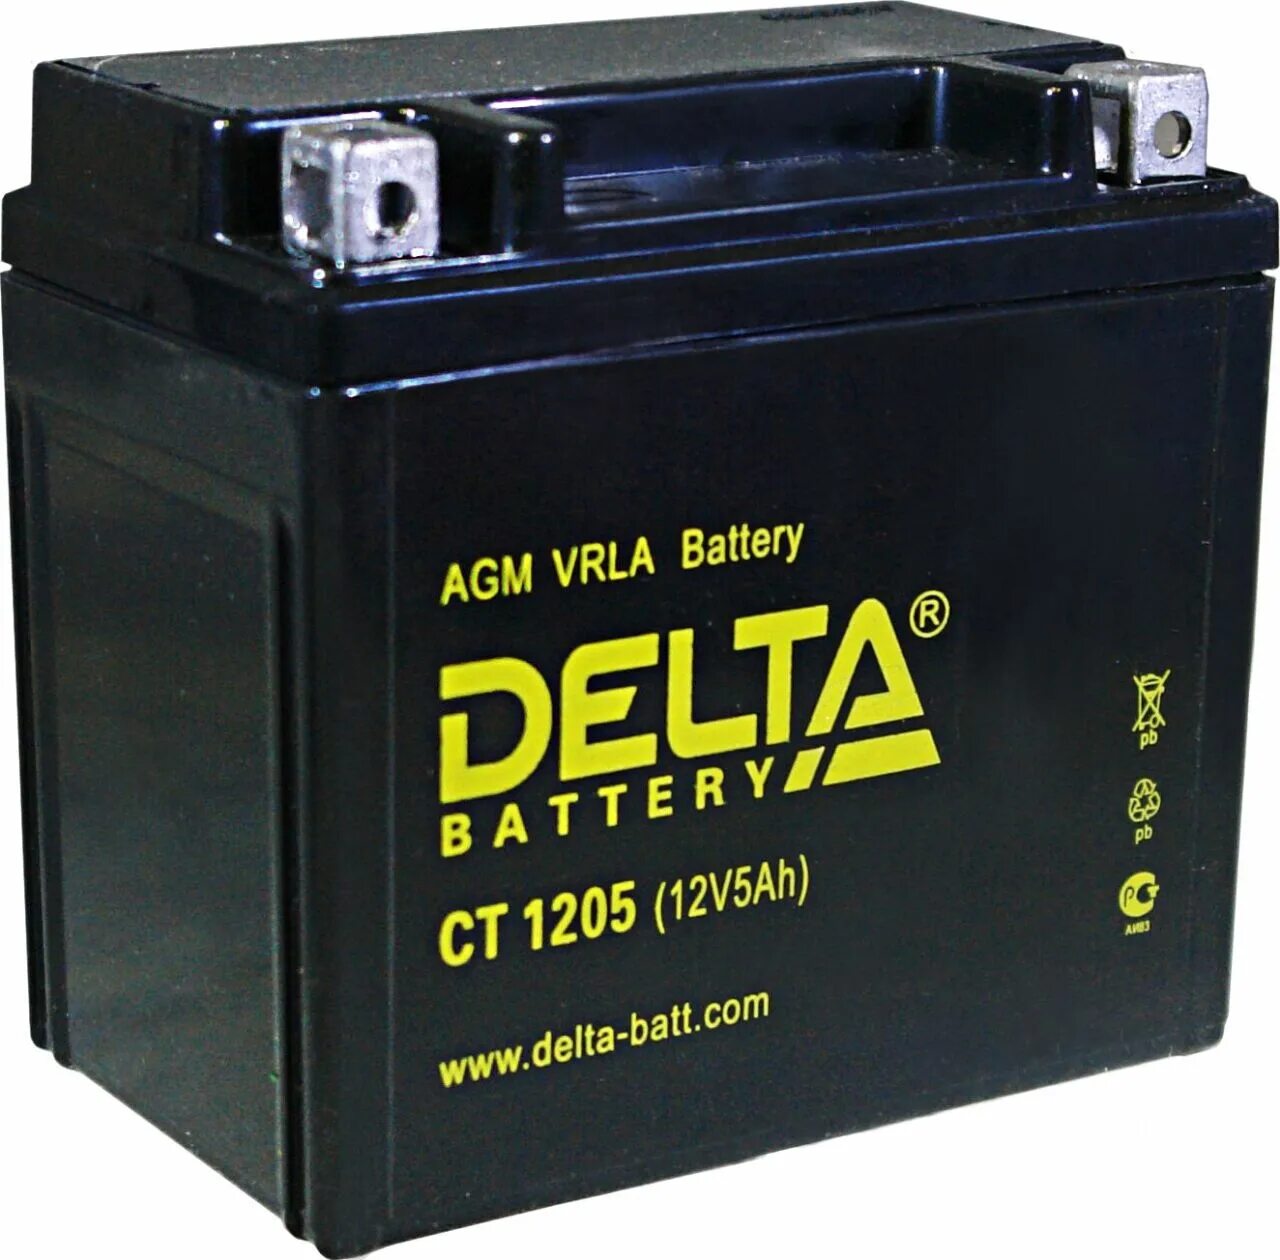 Мото аккумулятор Delta CT 1205.1. Аккумулятор на мотоцикл Дельта 1205. Аккумулятор Delta Battery ct1205. Delta аккумуляторная батарея CT 1205.